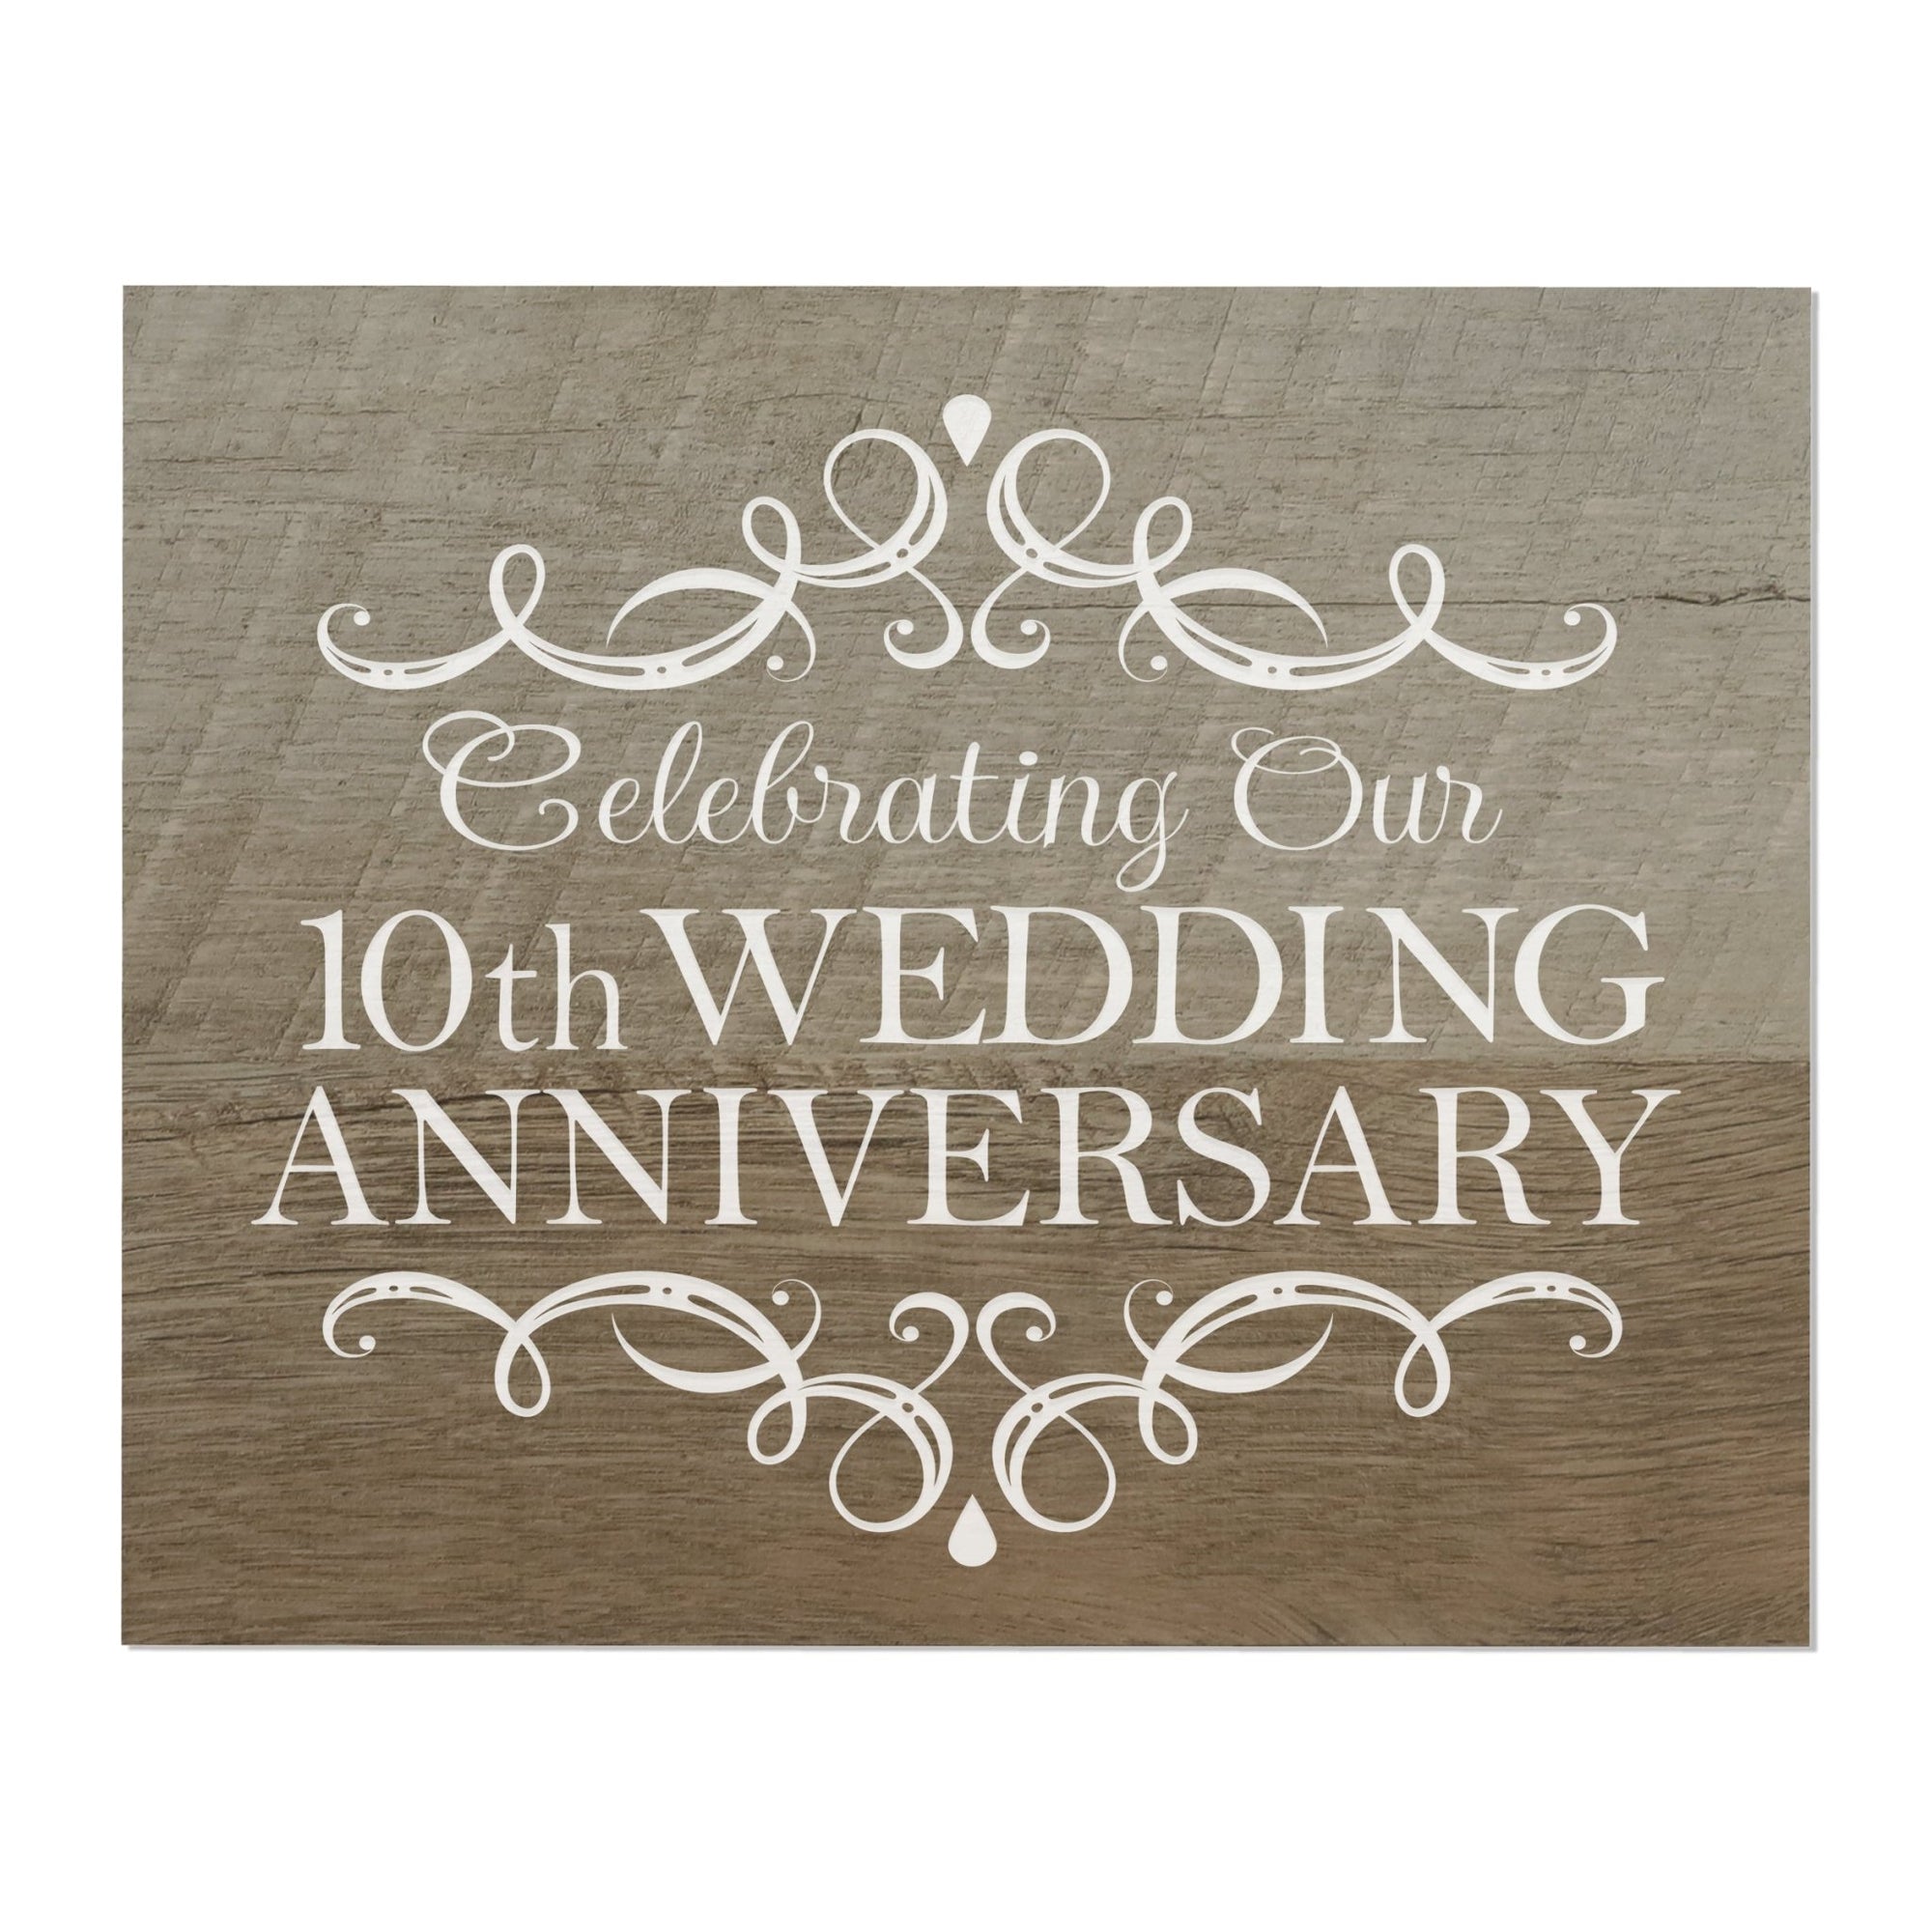 10th Wedding Anniversary Wall Plaque - Celebrating - LifeSong Milestones